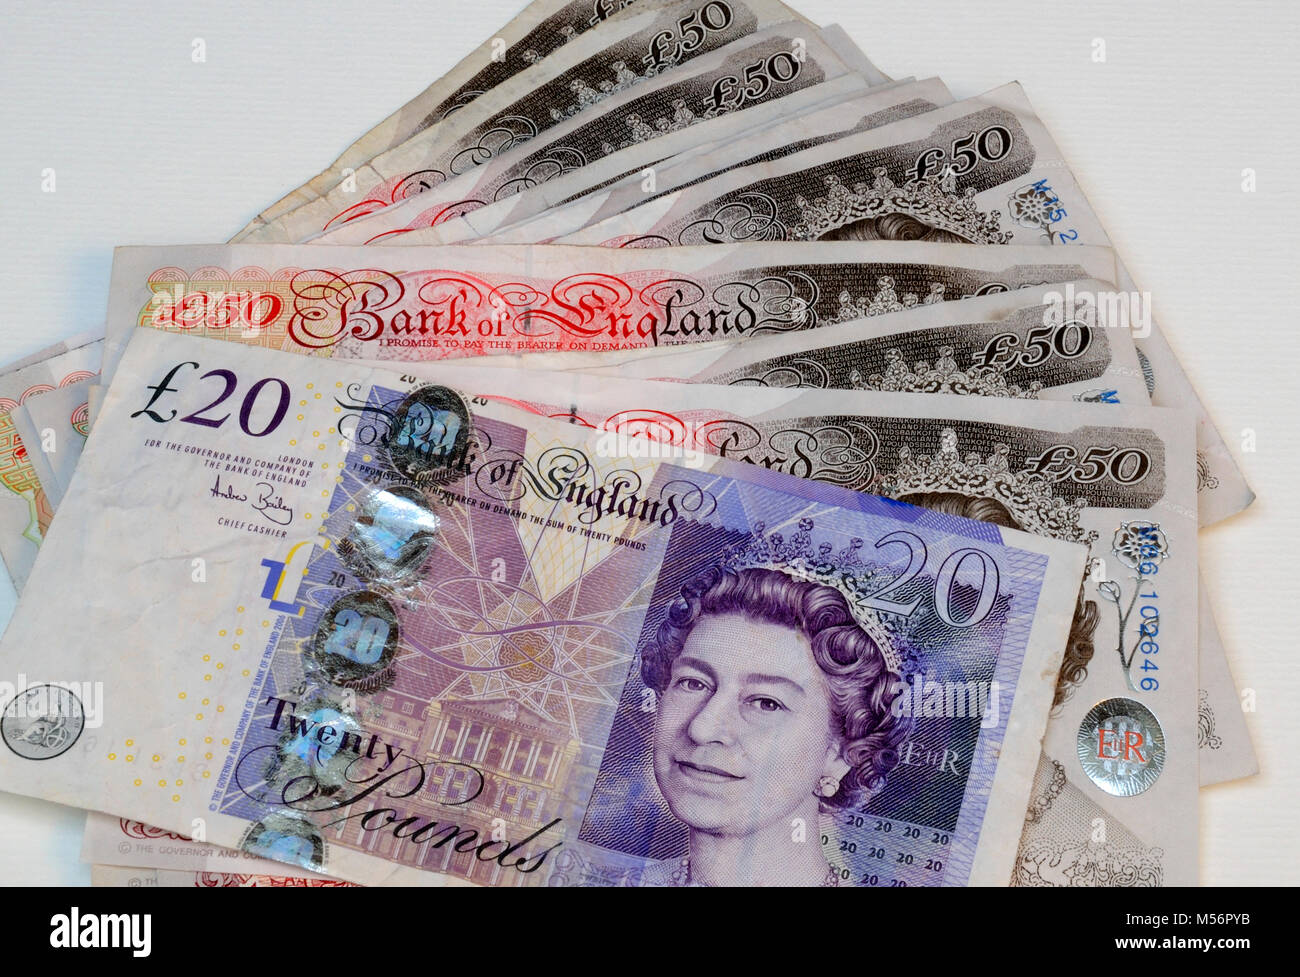 Short Term Loans UK Direct Lender: Quick Loan in an Easy Way